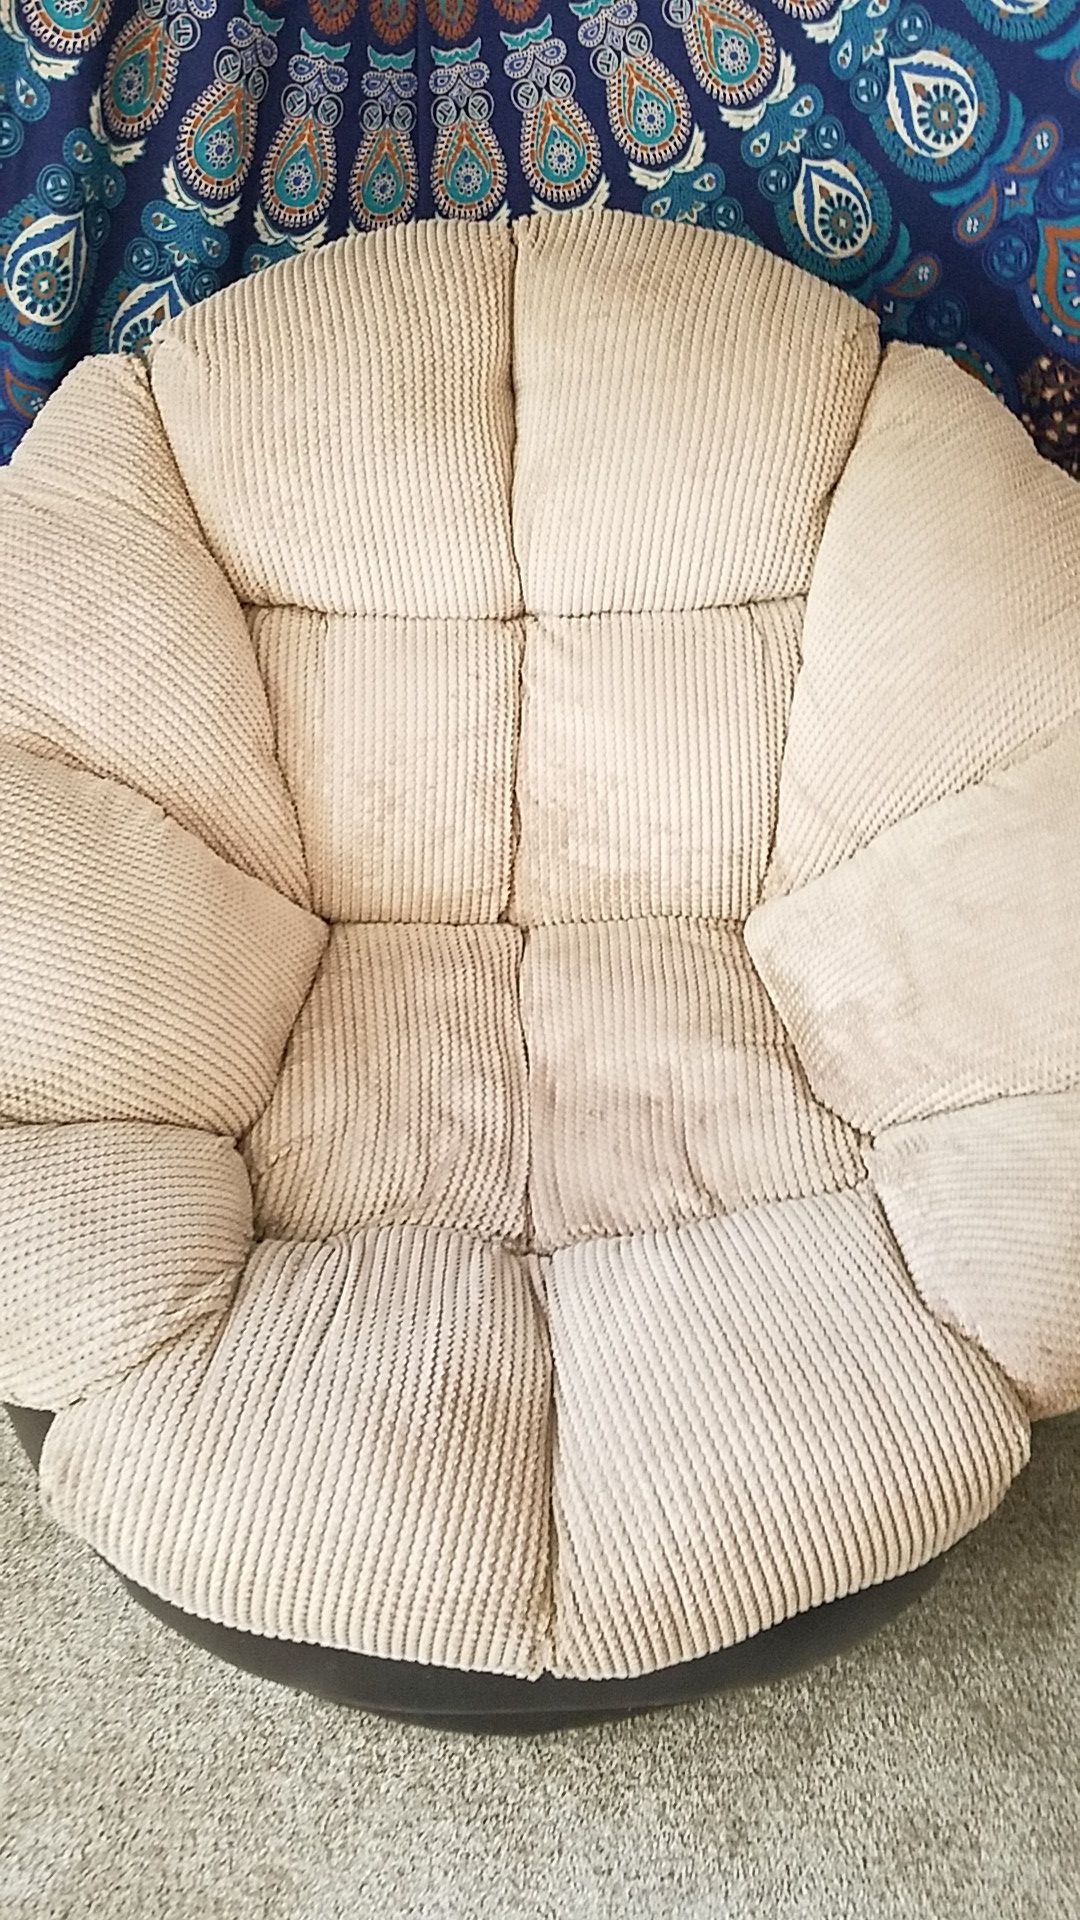 Comfy swivel chair